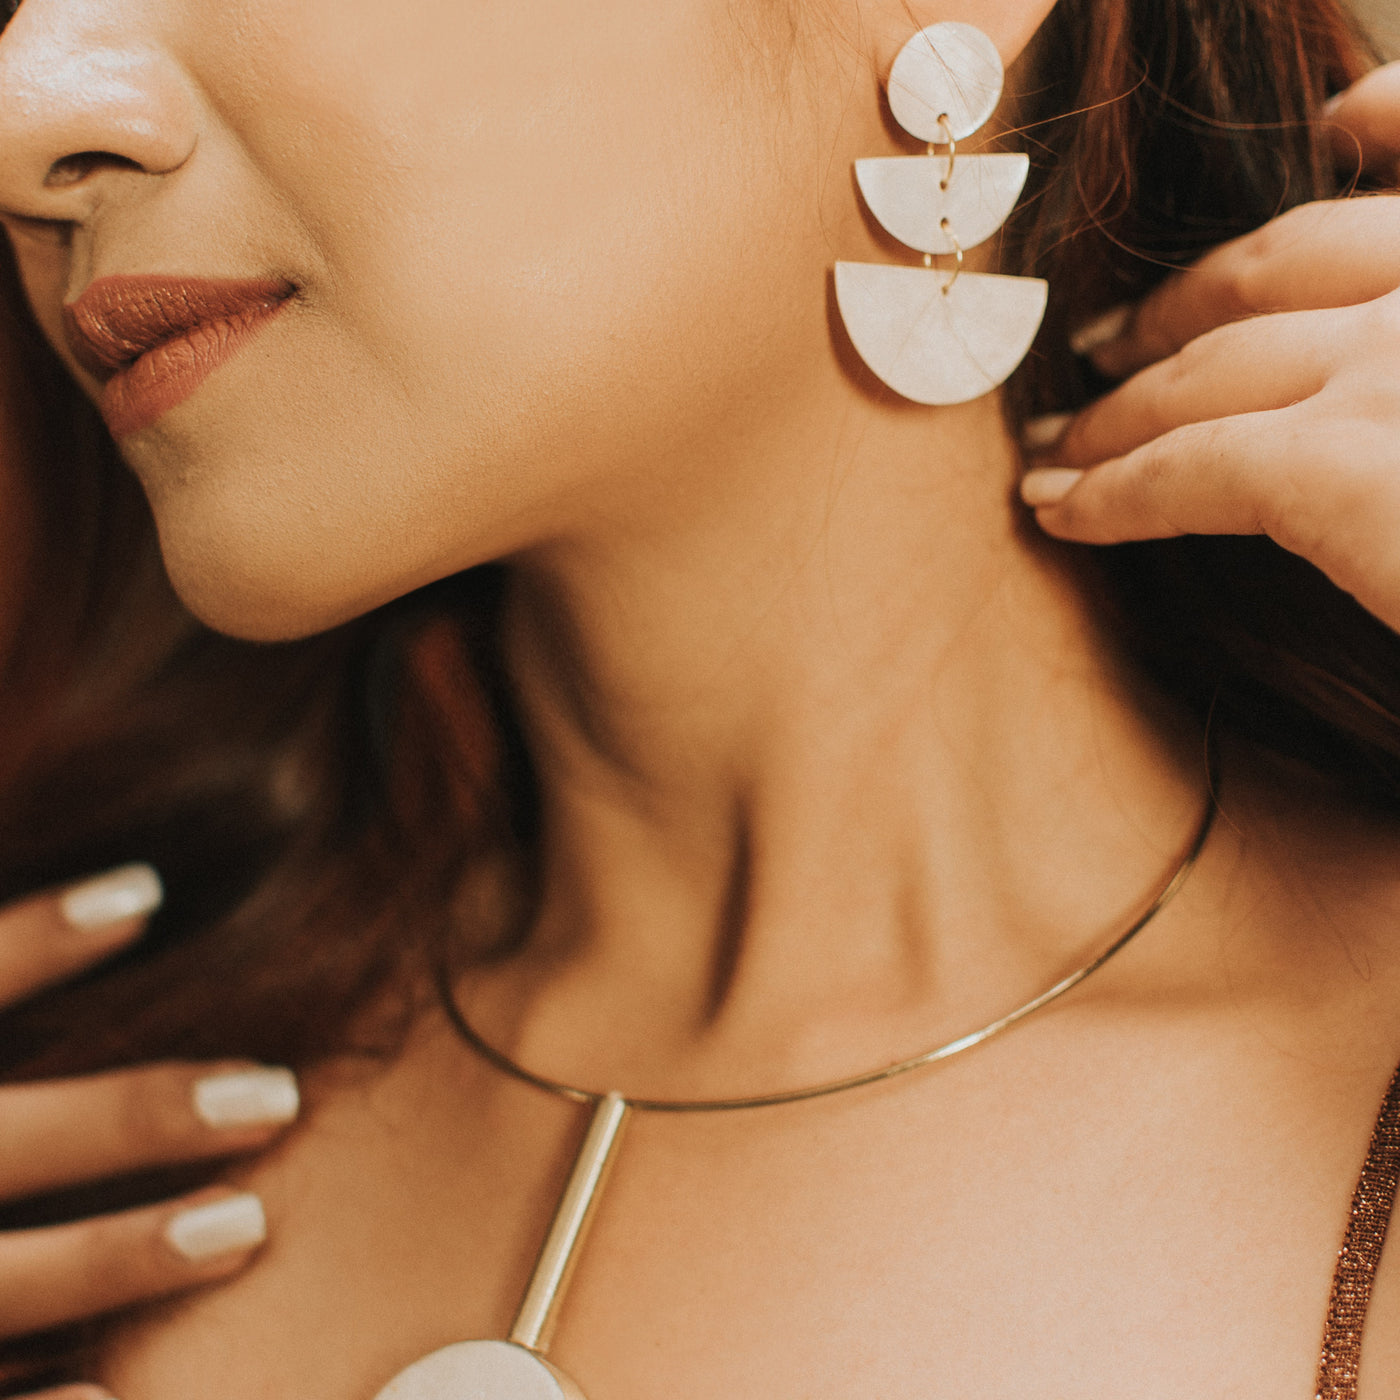 Philippine Capiz shell earrings and capiz brass choker necklace made by Filipino artisans